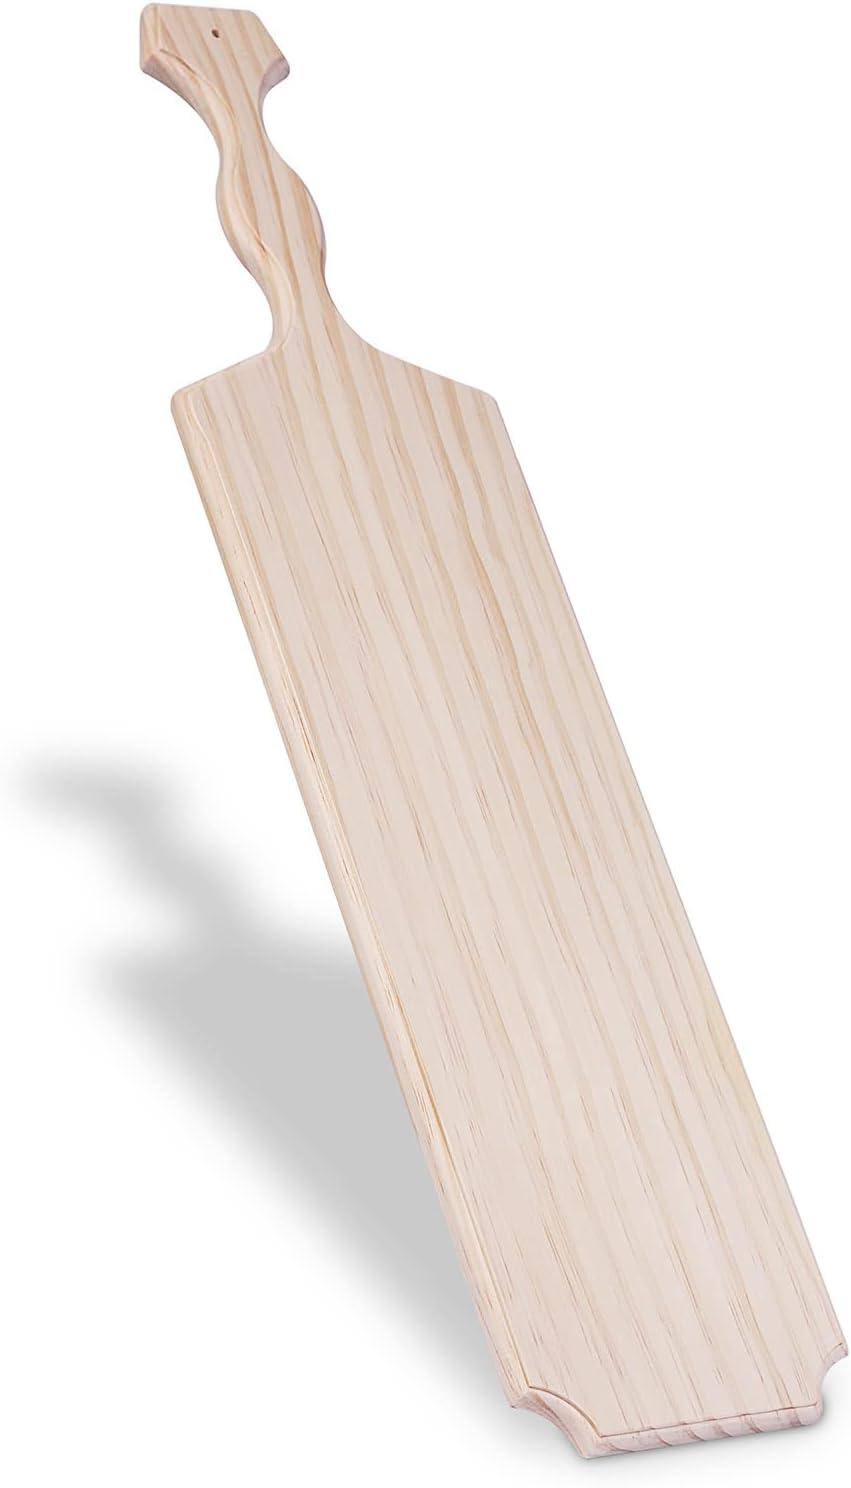 VENESUN Sorority Paddle 22inch Unfinished Pine Wooden Greek Fraternity  Paddle